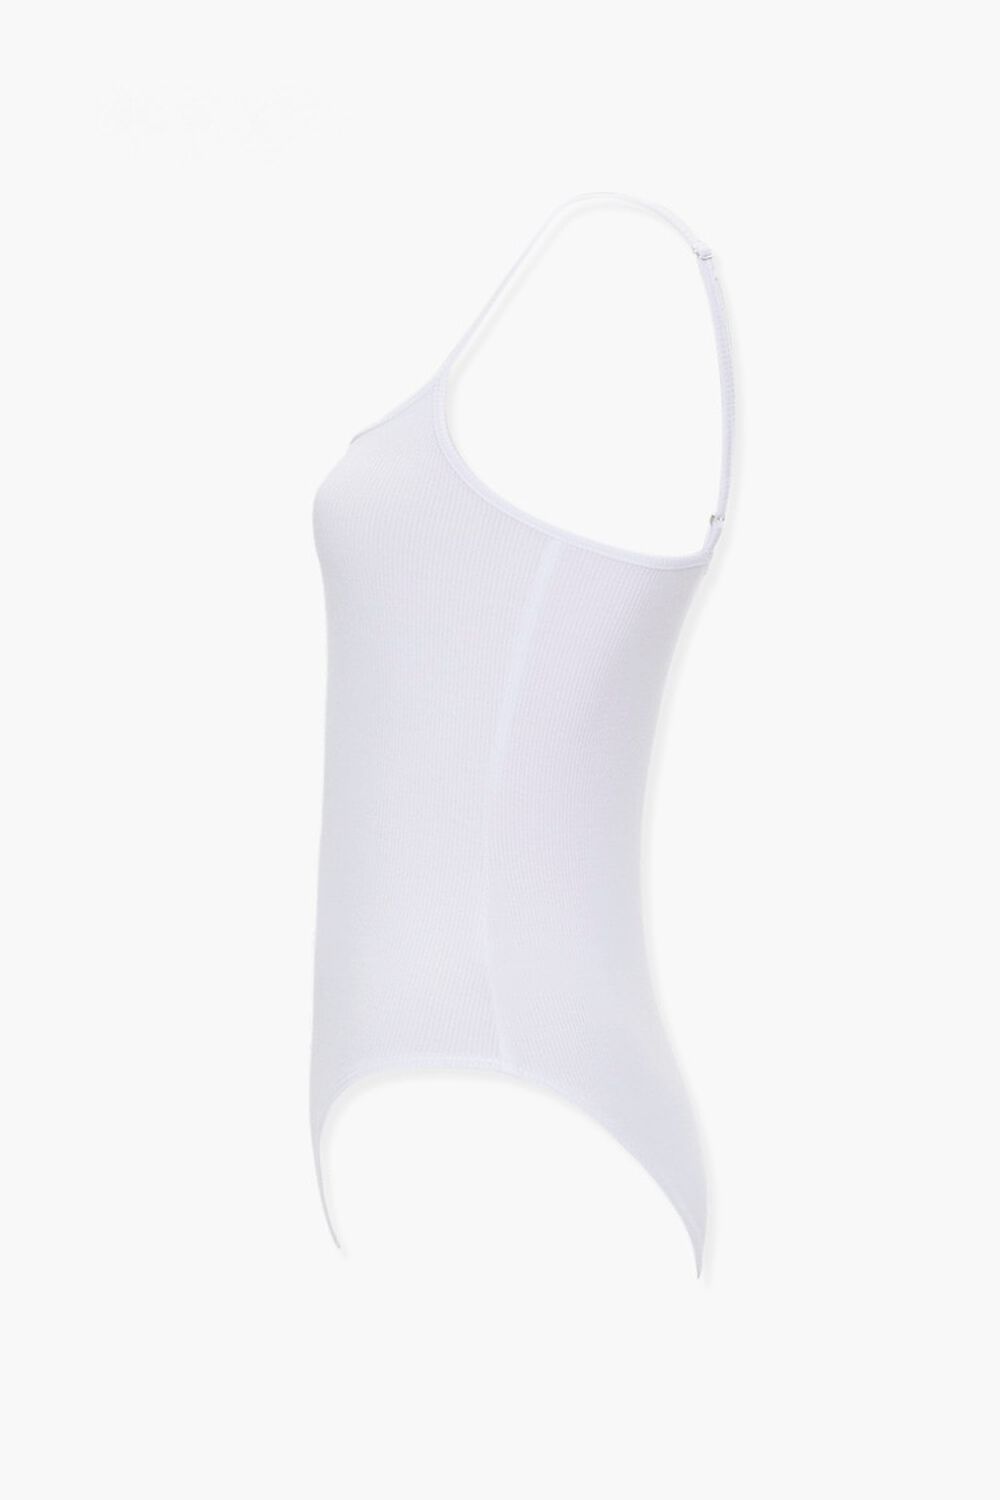 WHITE Ribbed Knit Cami Bodysuit, image 2